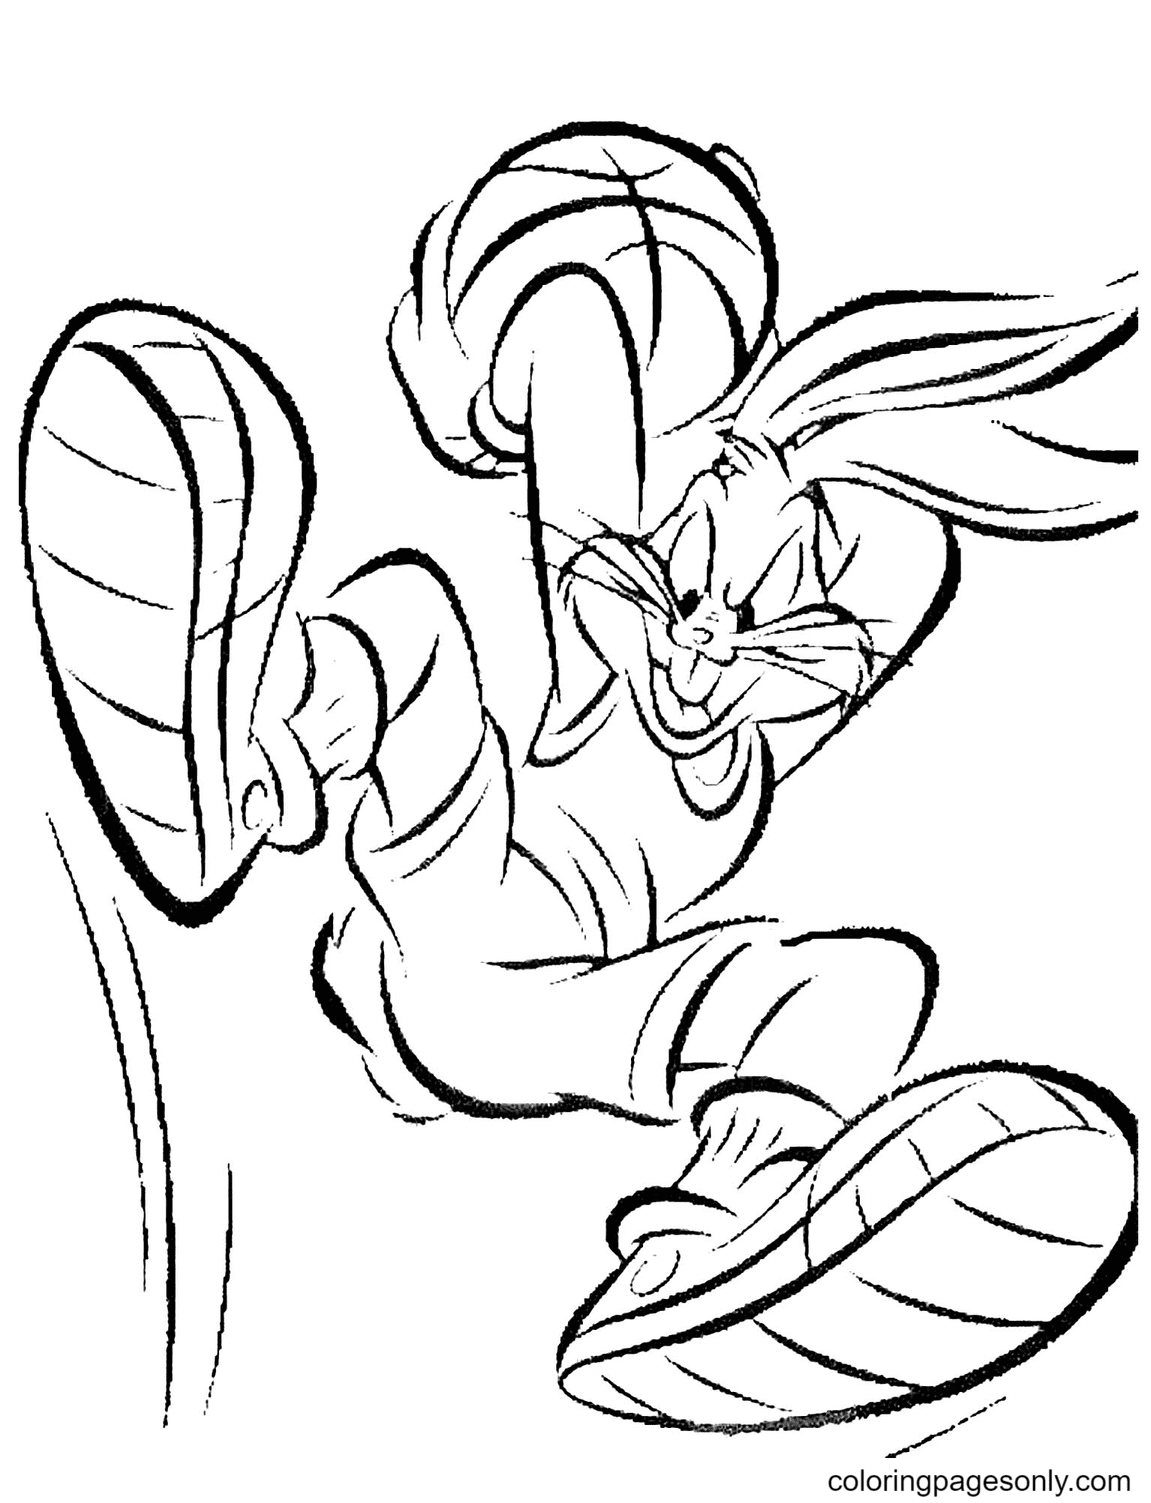 Desenho de Bugs Bunny jogando basquete para colorir